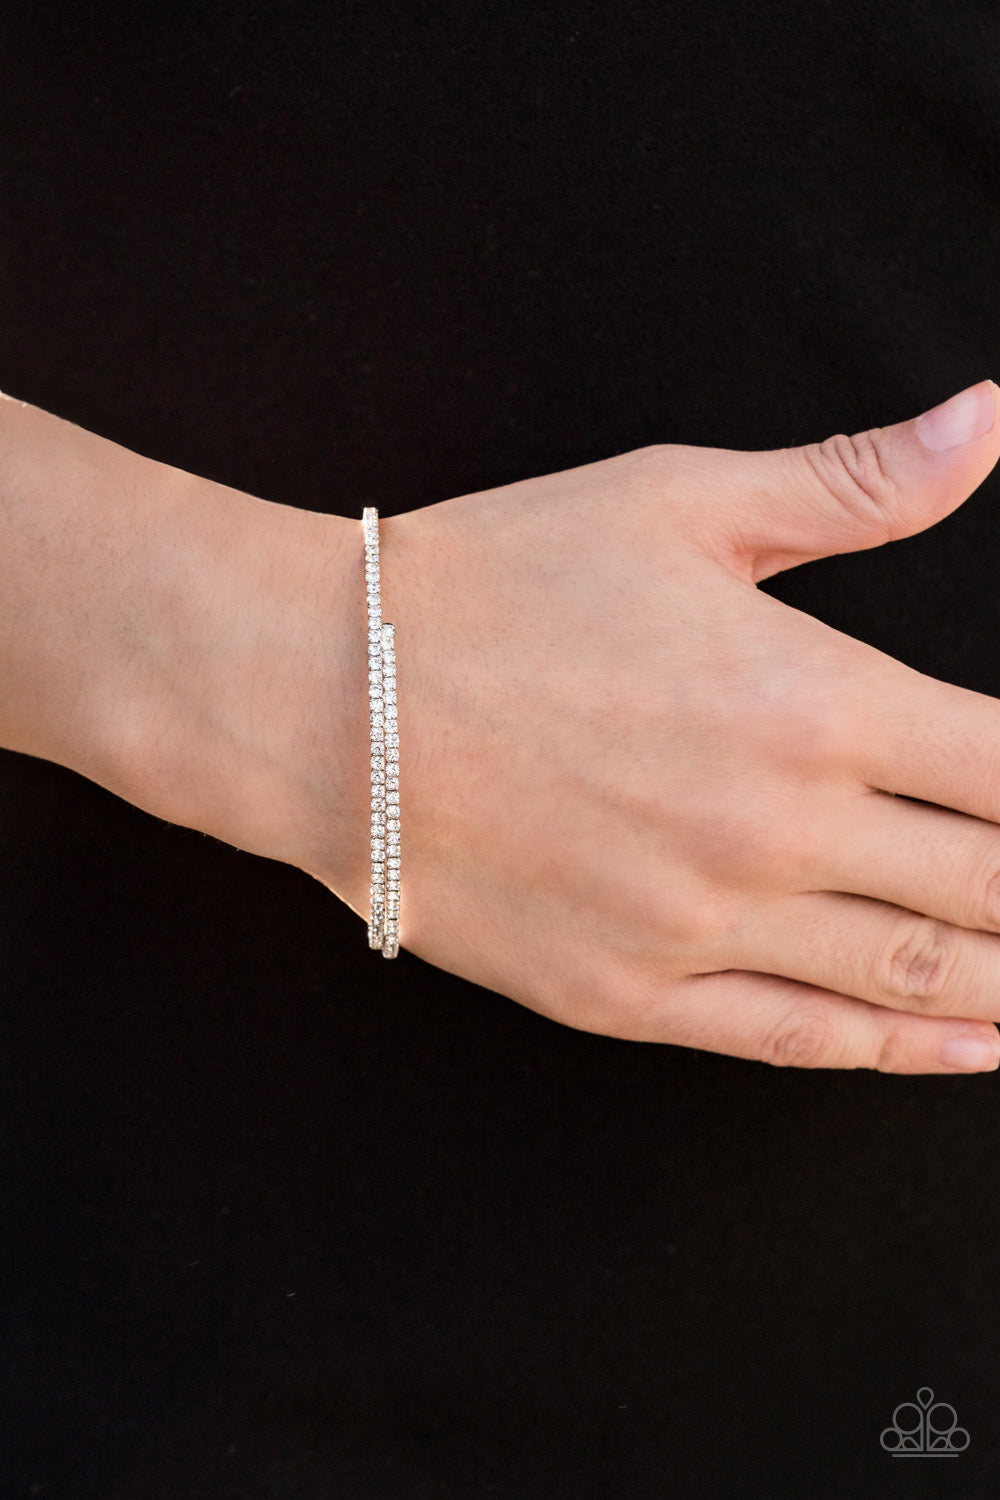 Sleek Sparkle - White Bracelet 1613B